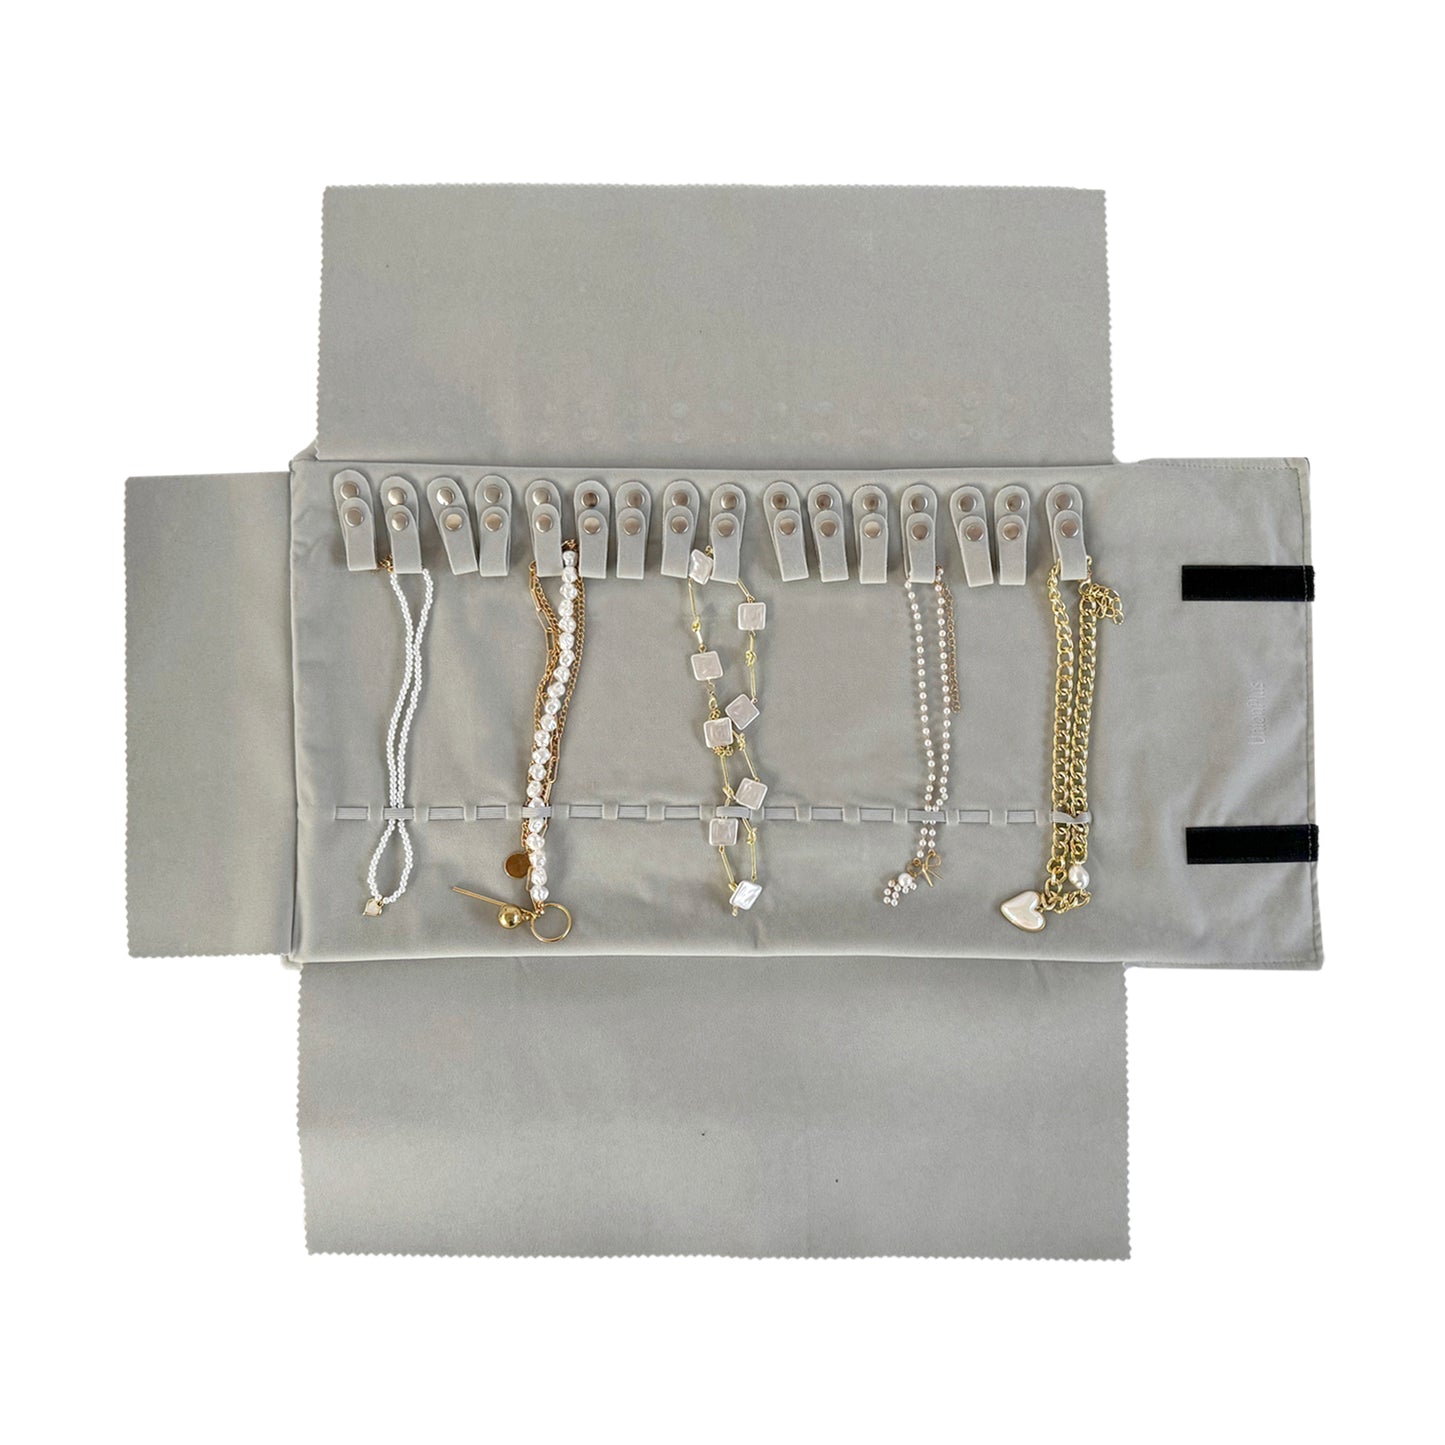 UnionPlus Velvet Travel Jewelry Roll Bag Organizer for Necklace, Elastic Band and Anti-winding, Medium Size